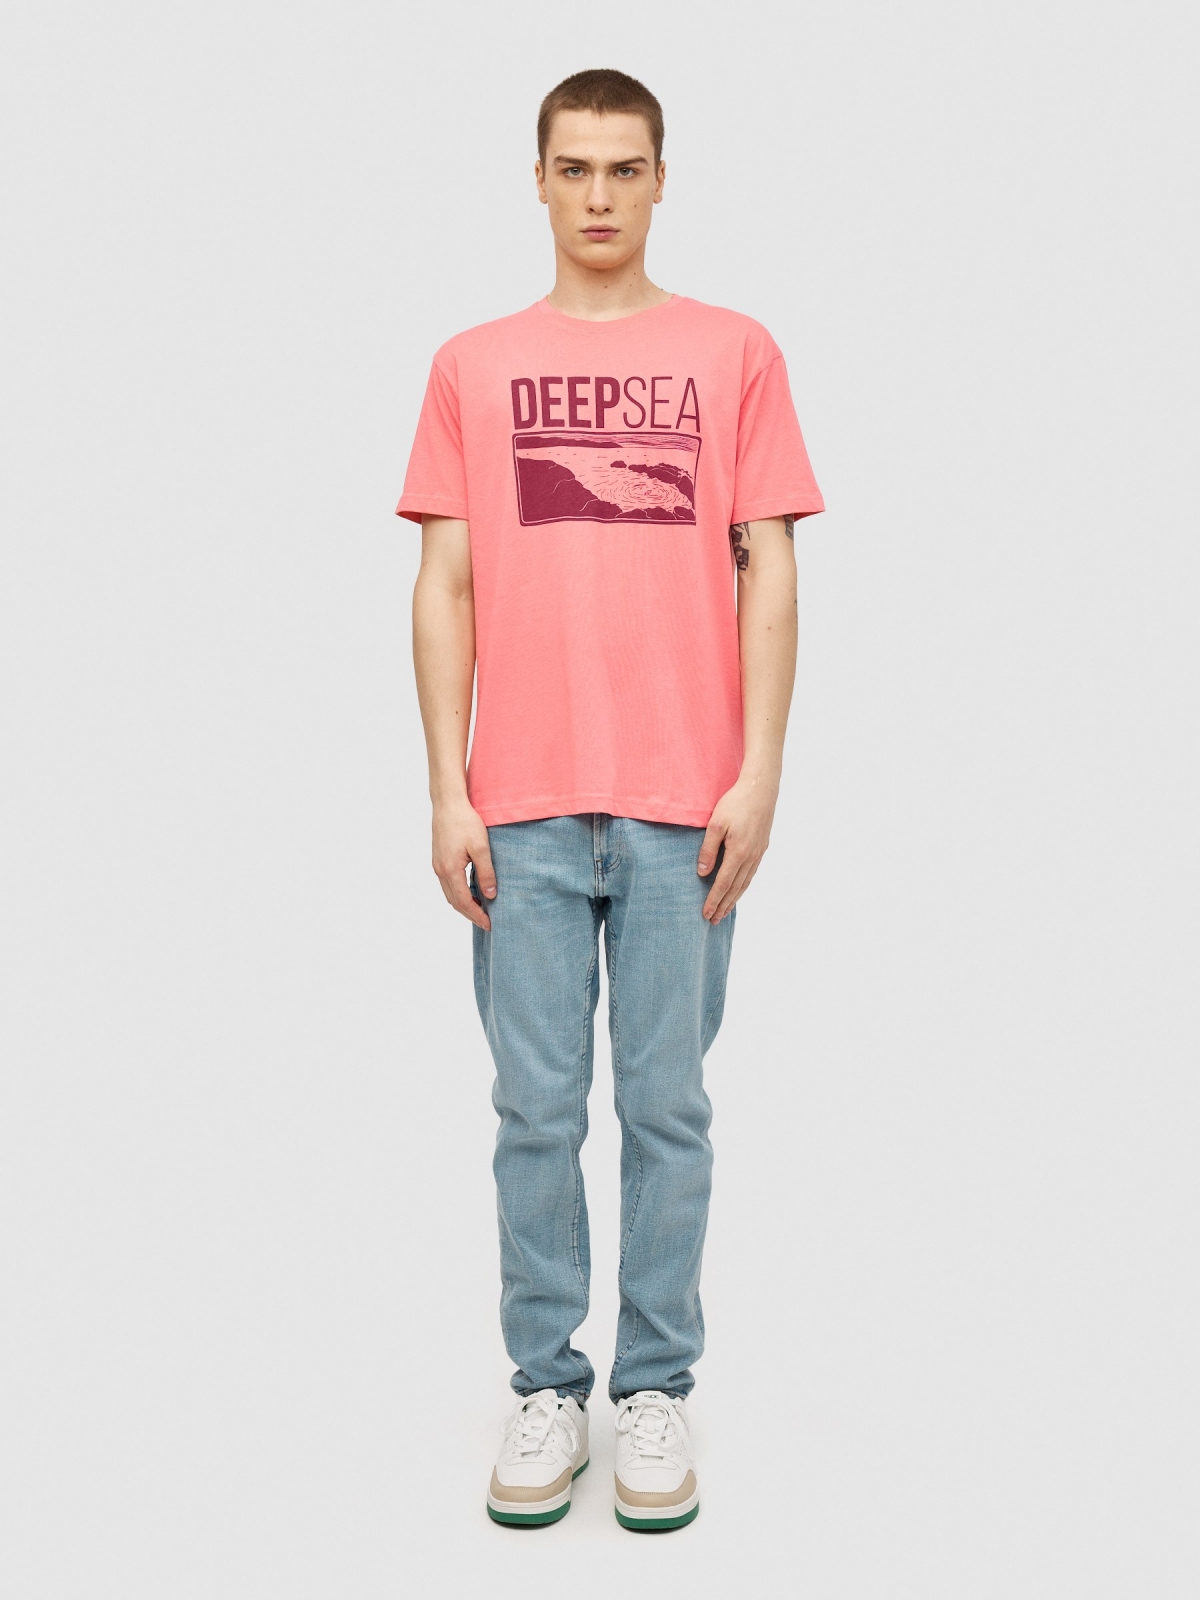 Camiseta Deep Sea rosa vista general frontal